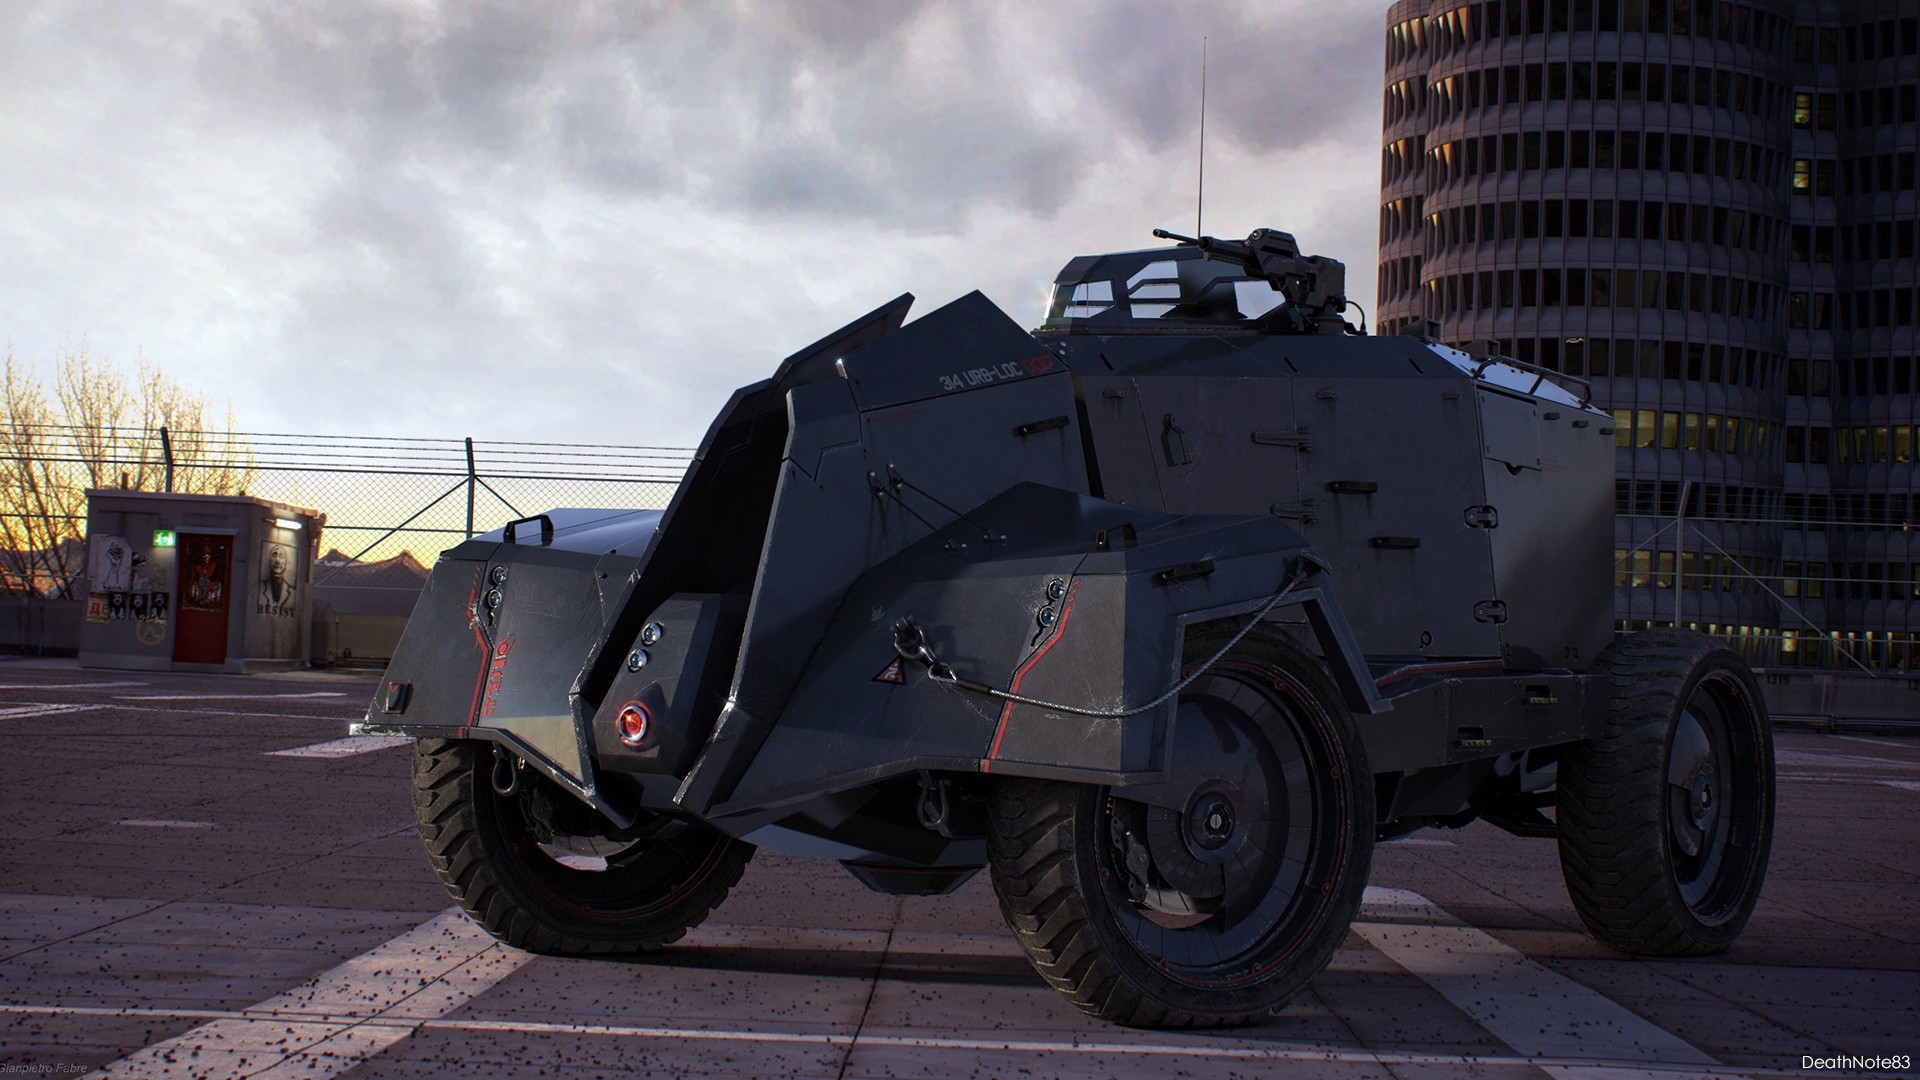 General 1920x1080 Half-Life 2 digital art APC video games Half-Life Combine civil protection Valve Corporation City 17 PC gaming CGI vehicle